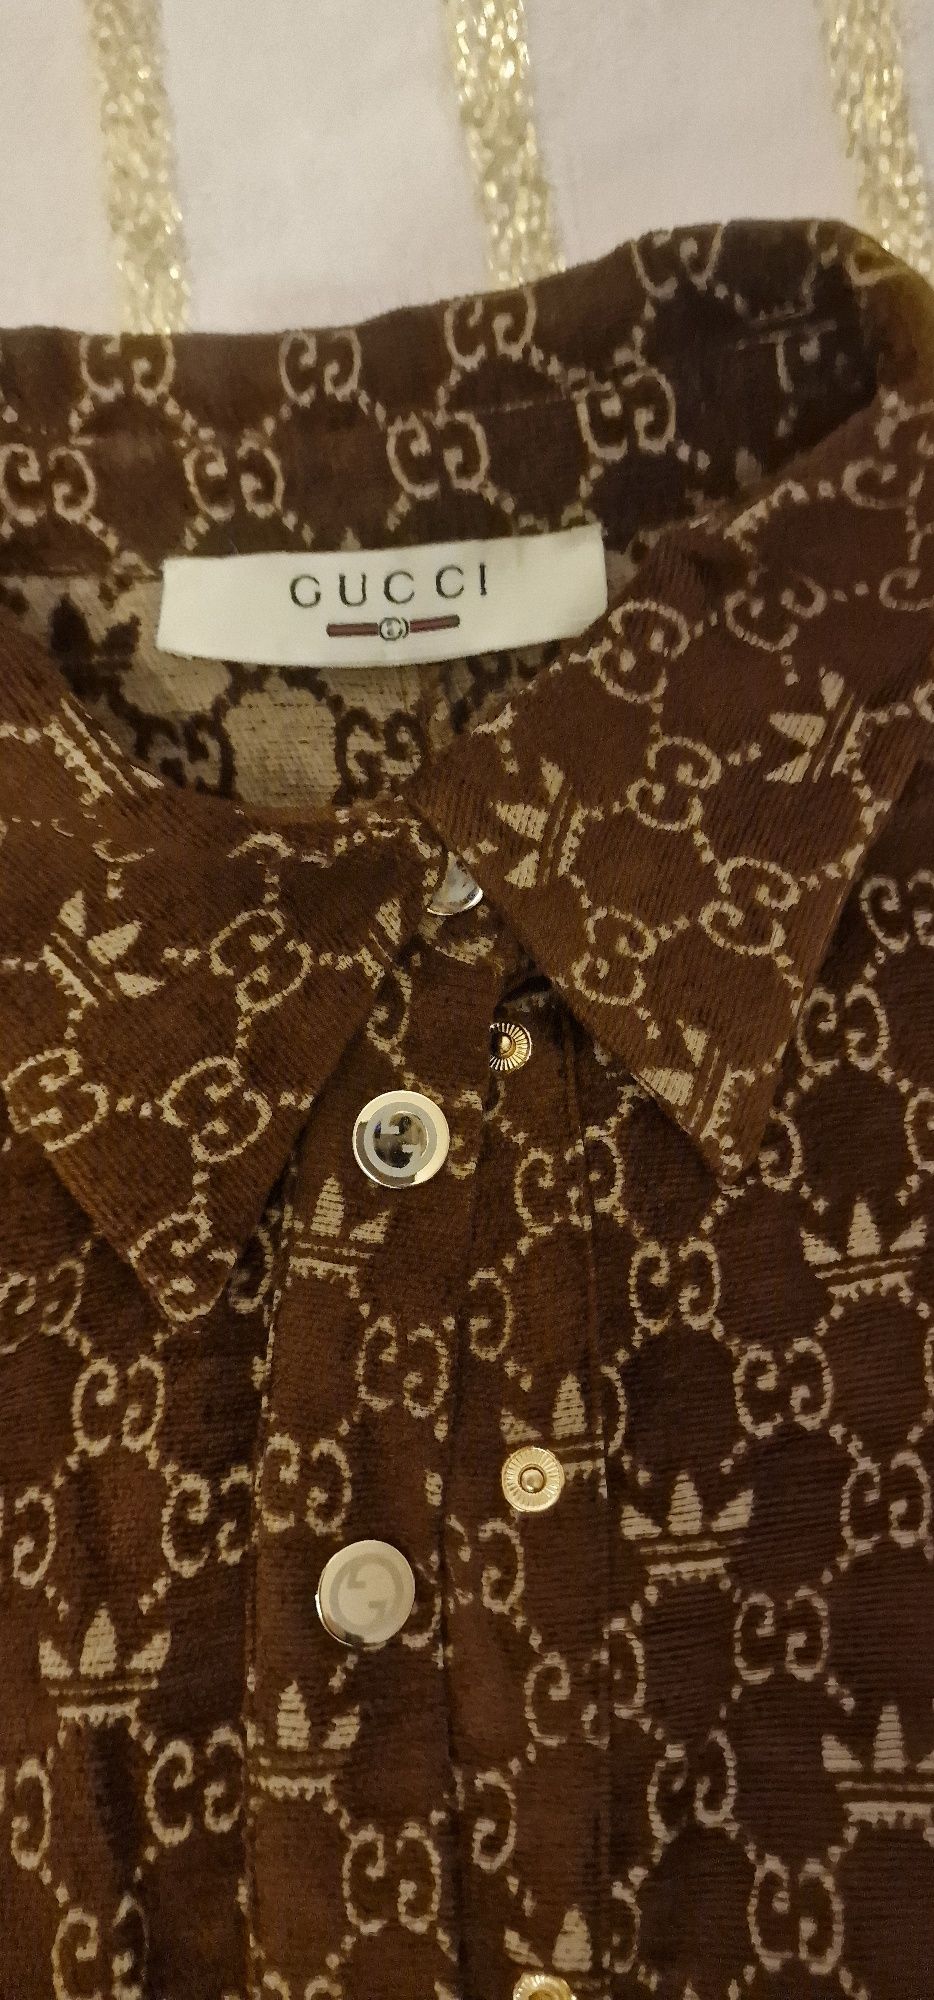 Tunika Adidas Gucci Polecam! Nowa